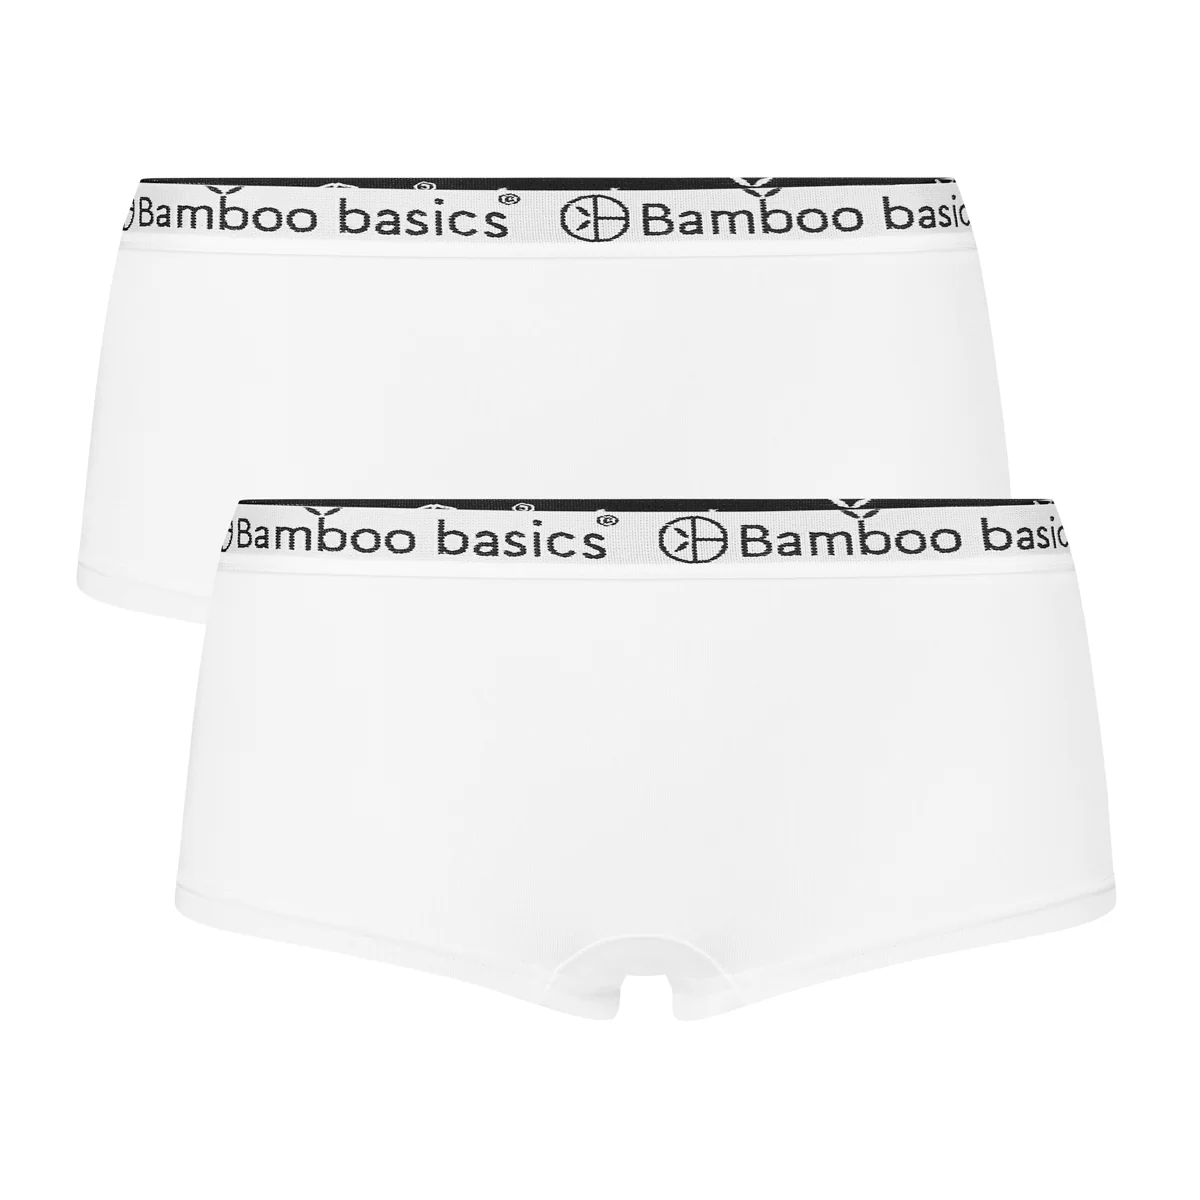 Bamboo basics